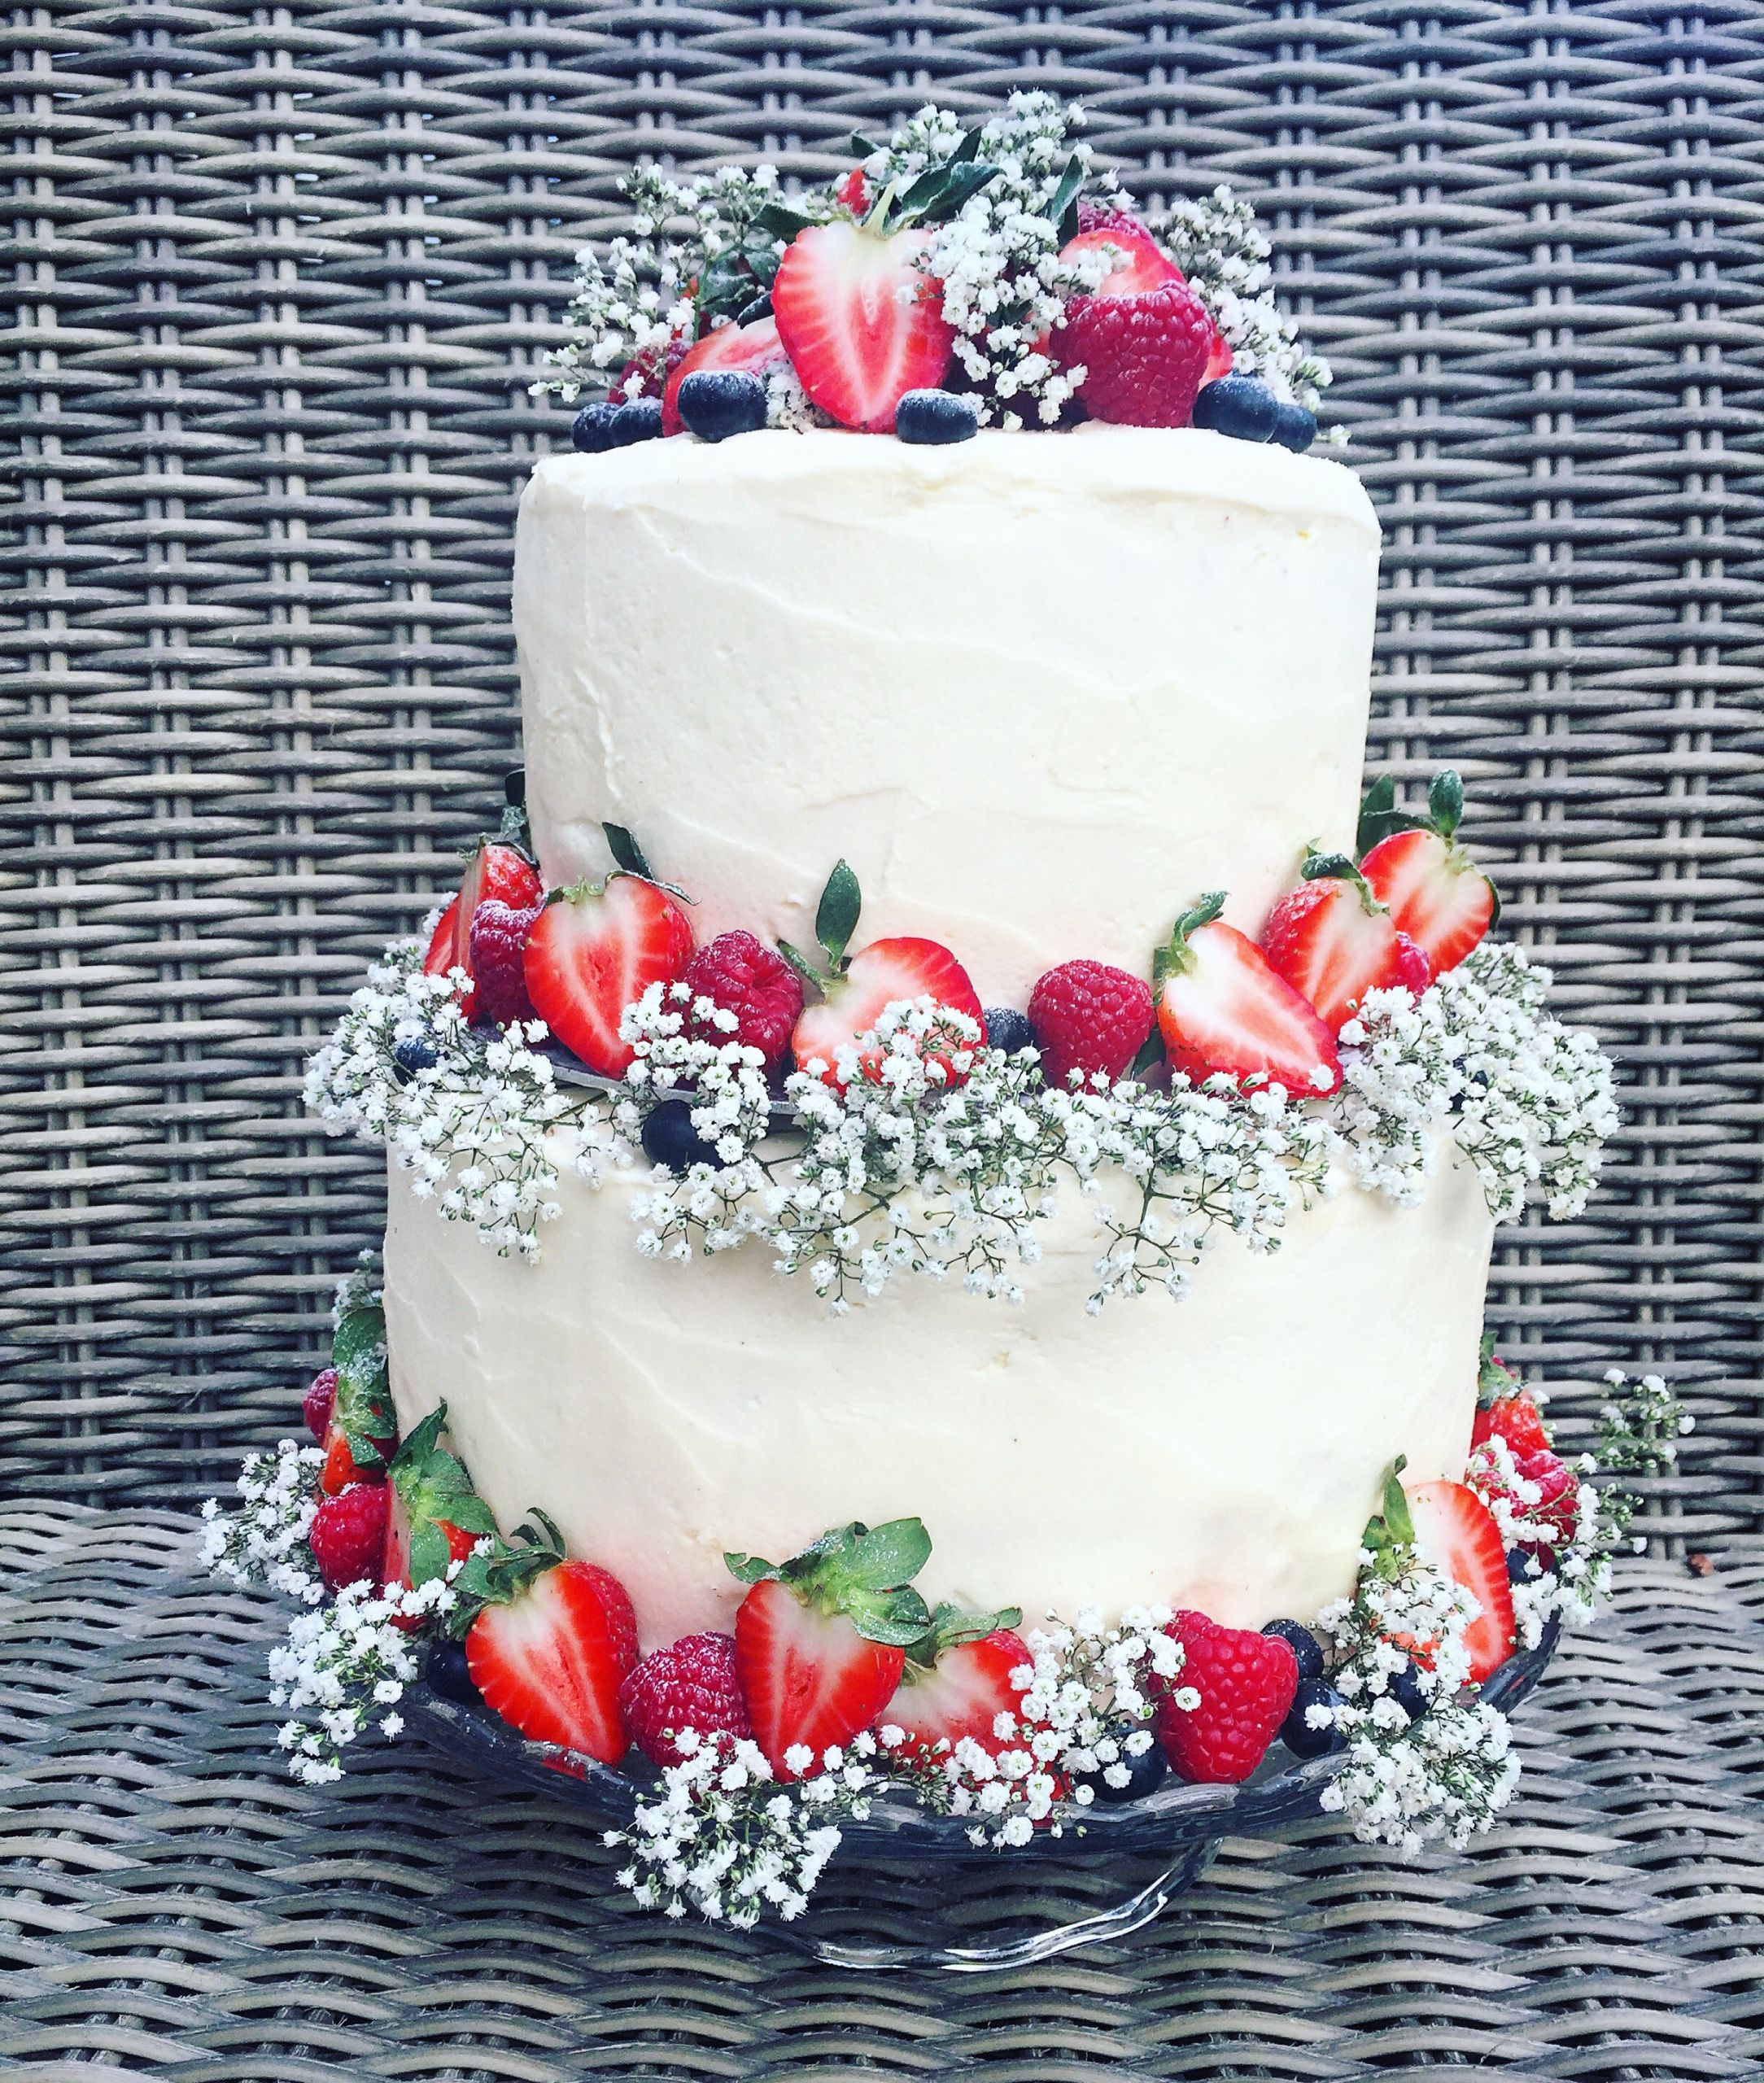 Cheesecake Wedding Cakes
 Red Velvet & Vanilla Baked Cheesecake Wedding Cake